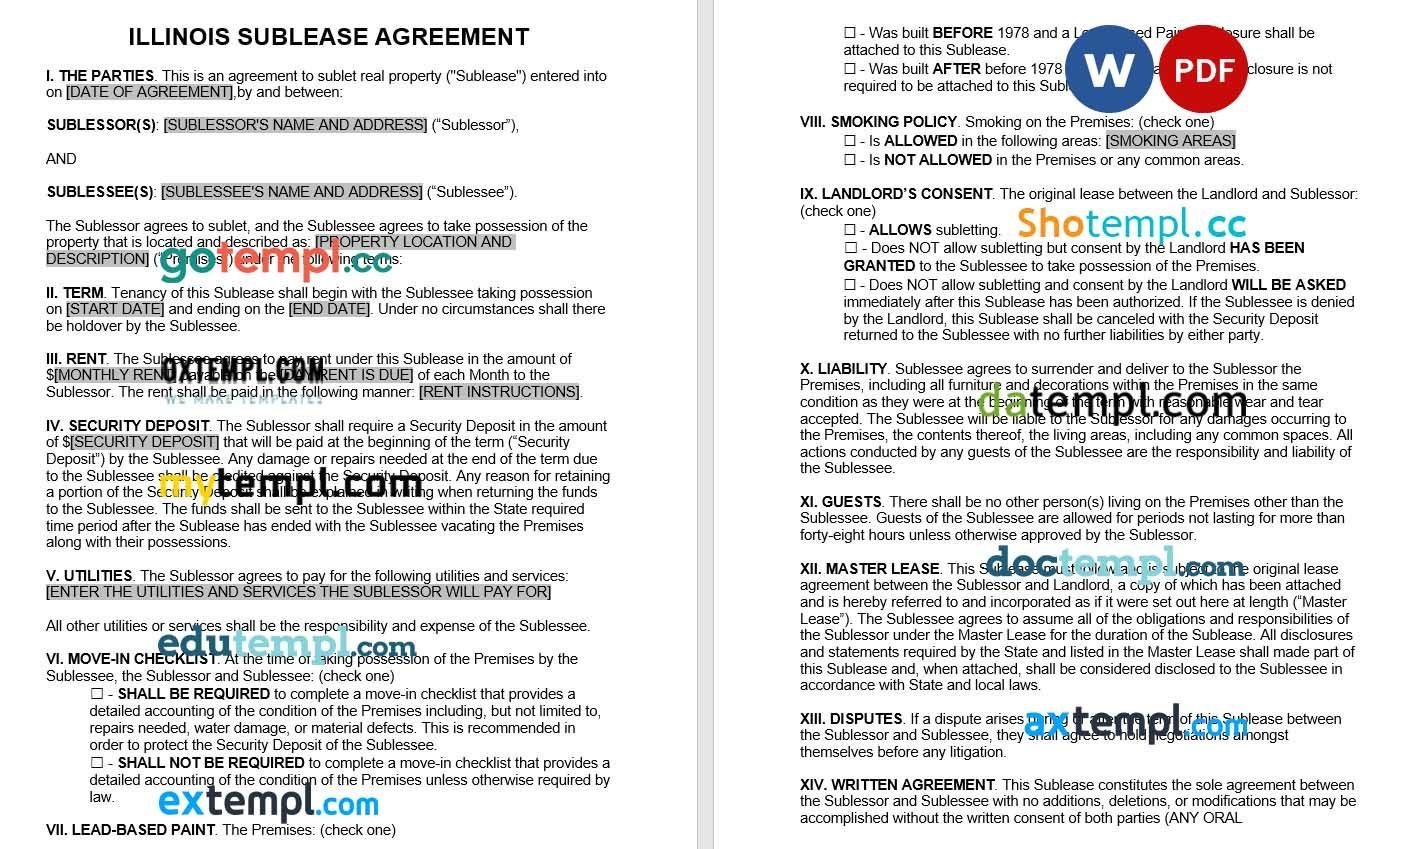 Illinois Sublease Agreement Word example, fully editable